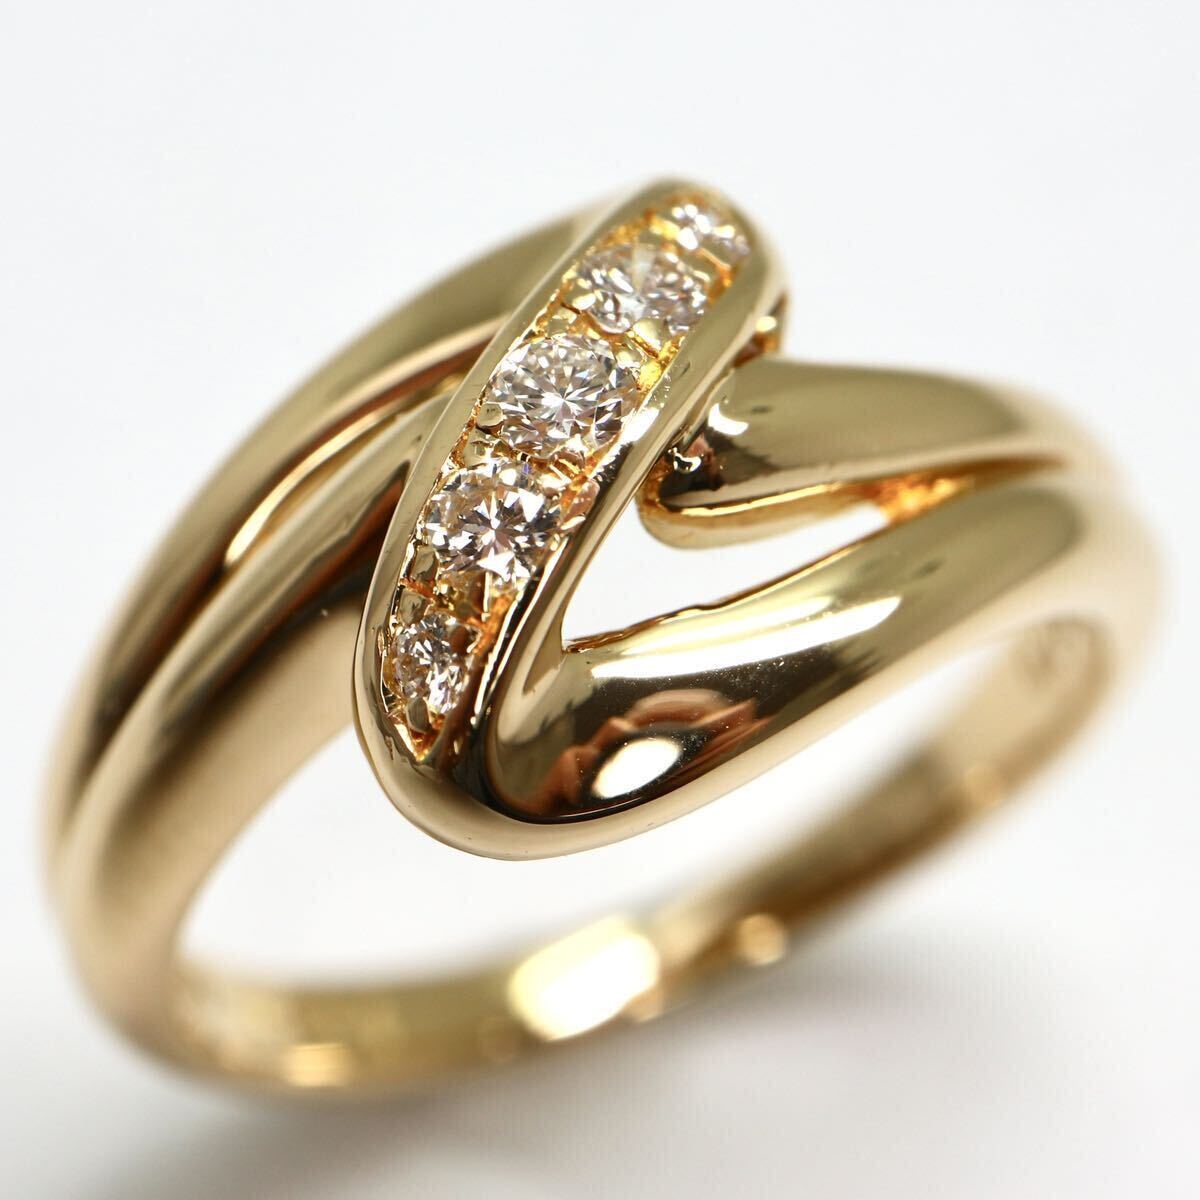 POLA jewelry(ポーラ)《K18 天然ダイヤモンドリング》A 約4.4g 11号 0.11ct diamond ジュエリー ring 指輪 EC8/E_画像2